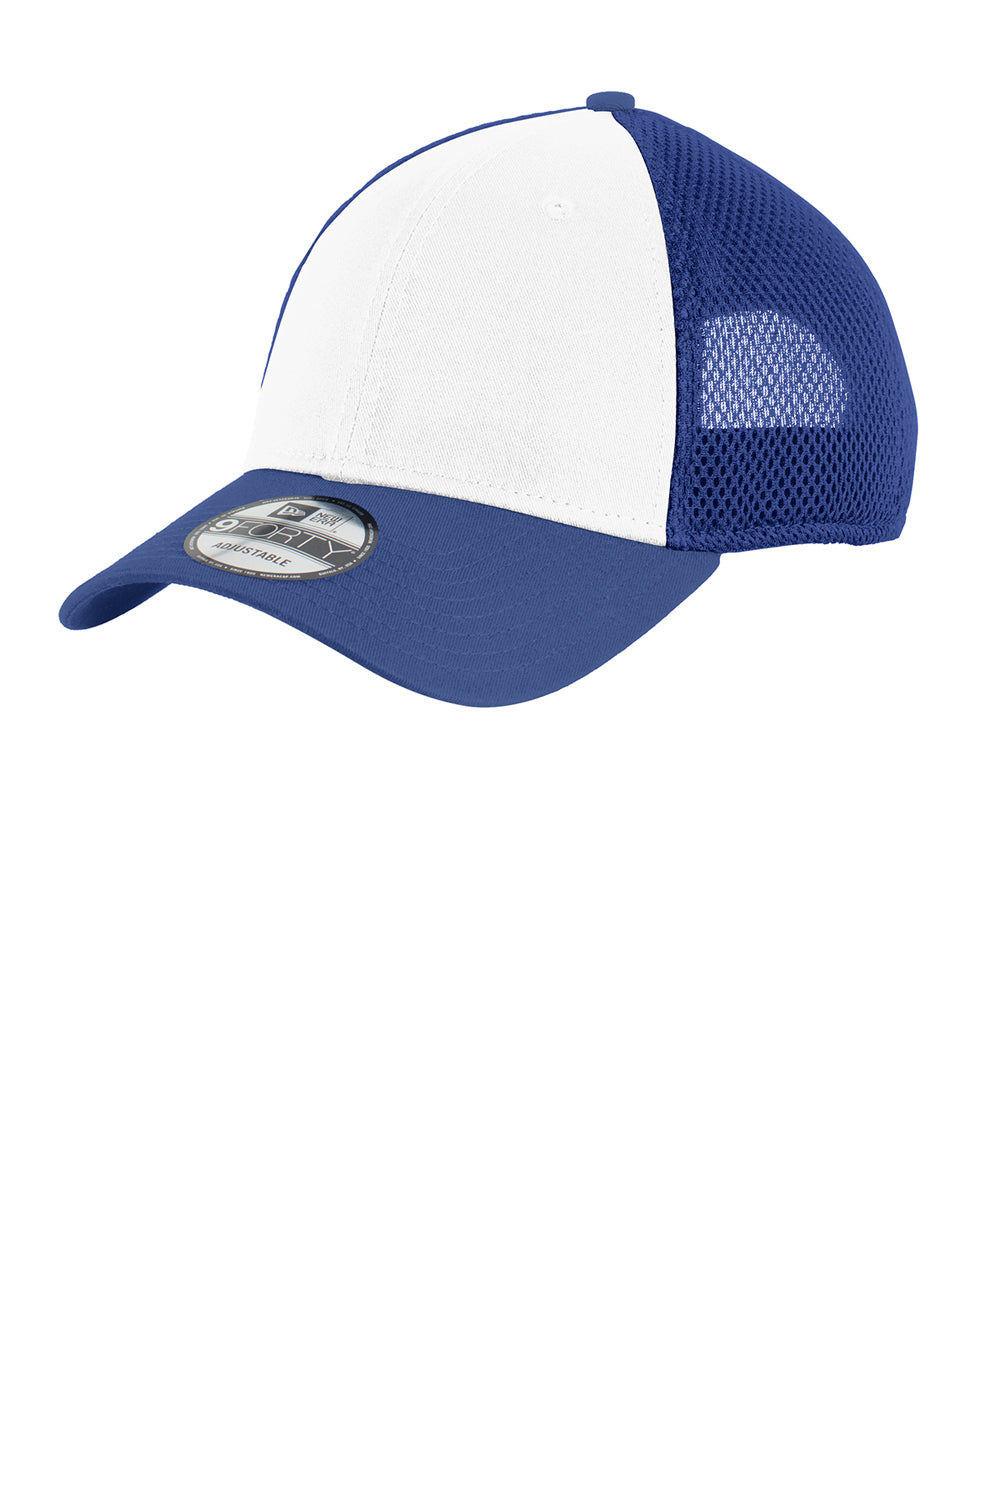 New Era NE204 Mens Adjustable Hat White/Royal Blue Front